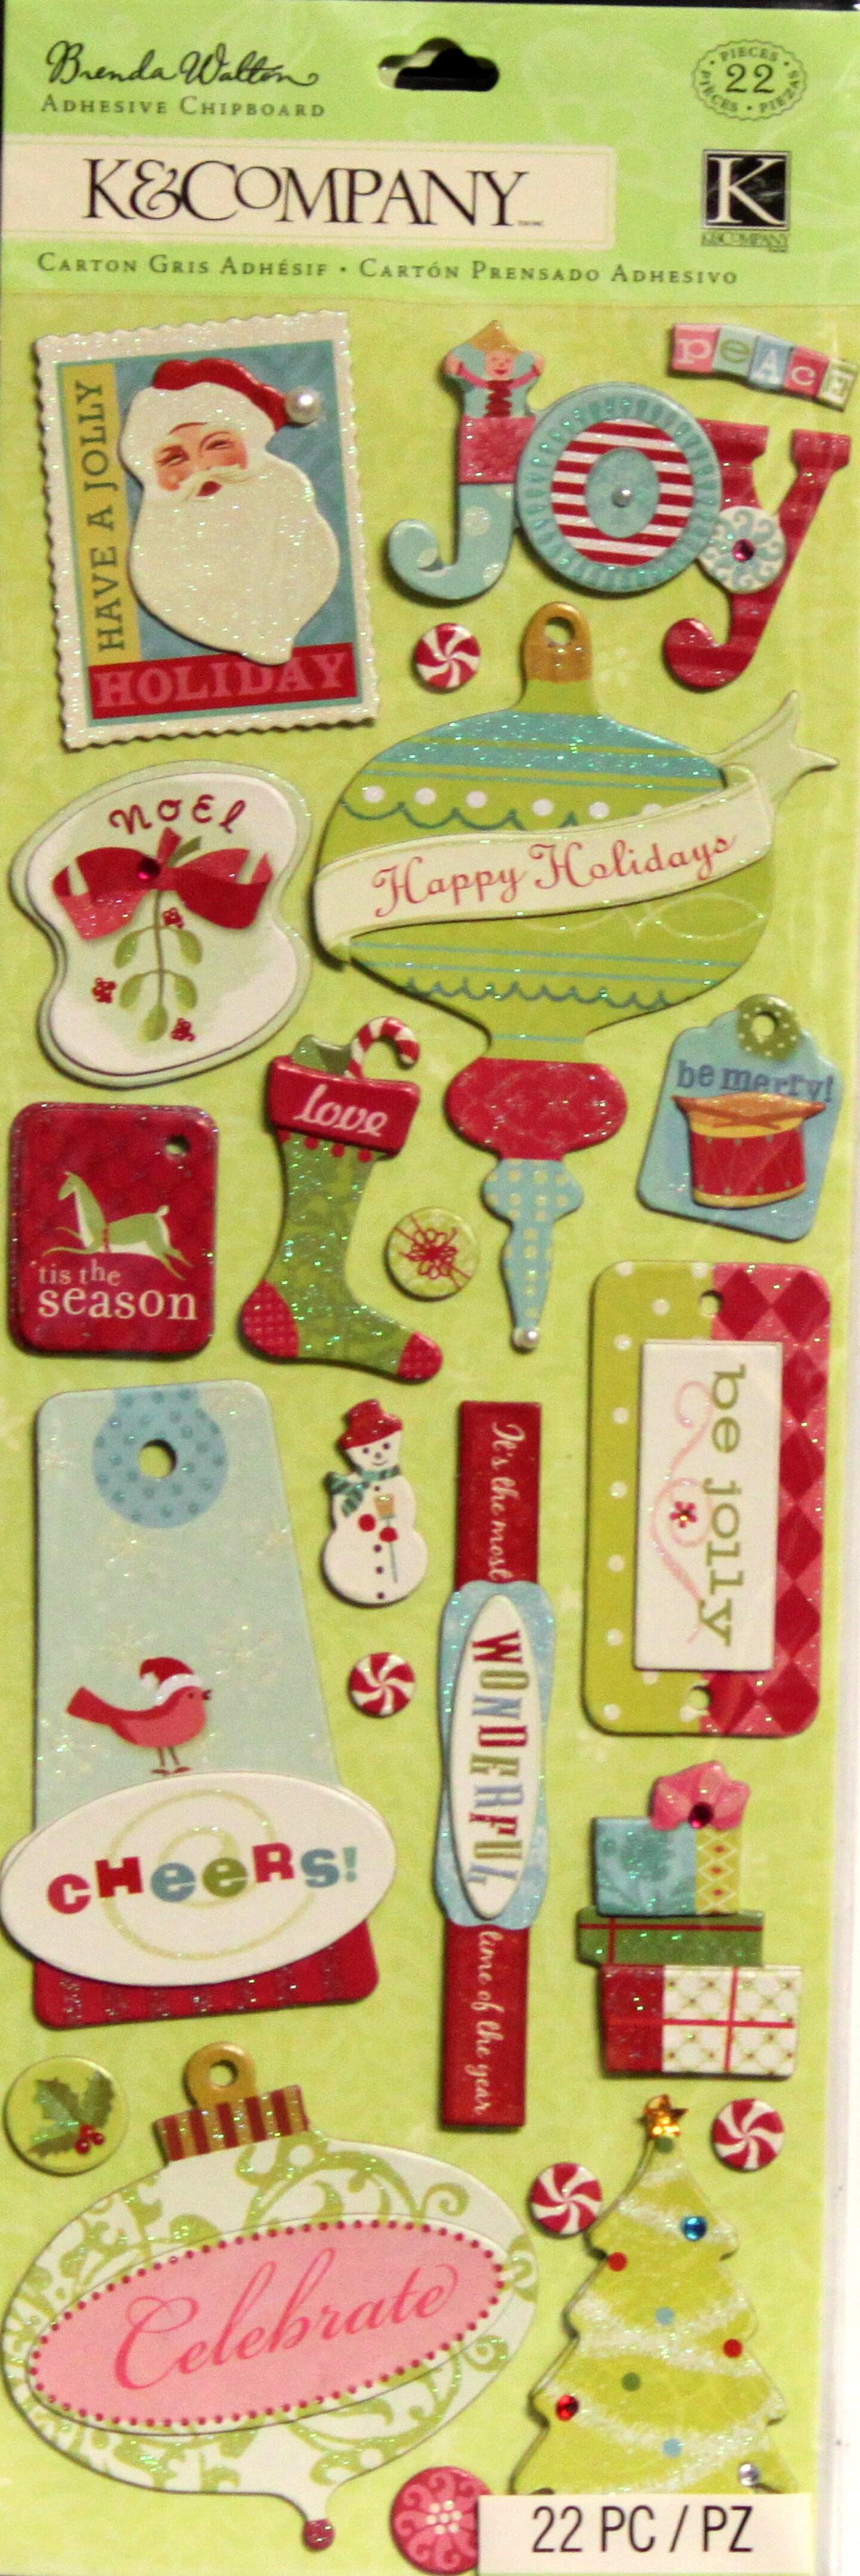 K &#x26; Company Brenda Walton Peppermint Twist Christmas Adhesive Chipboard Dimensional Stickers